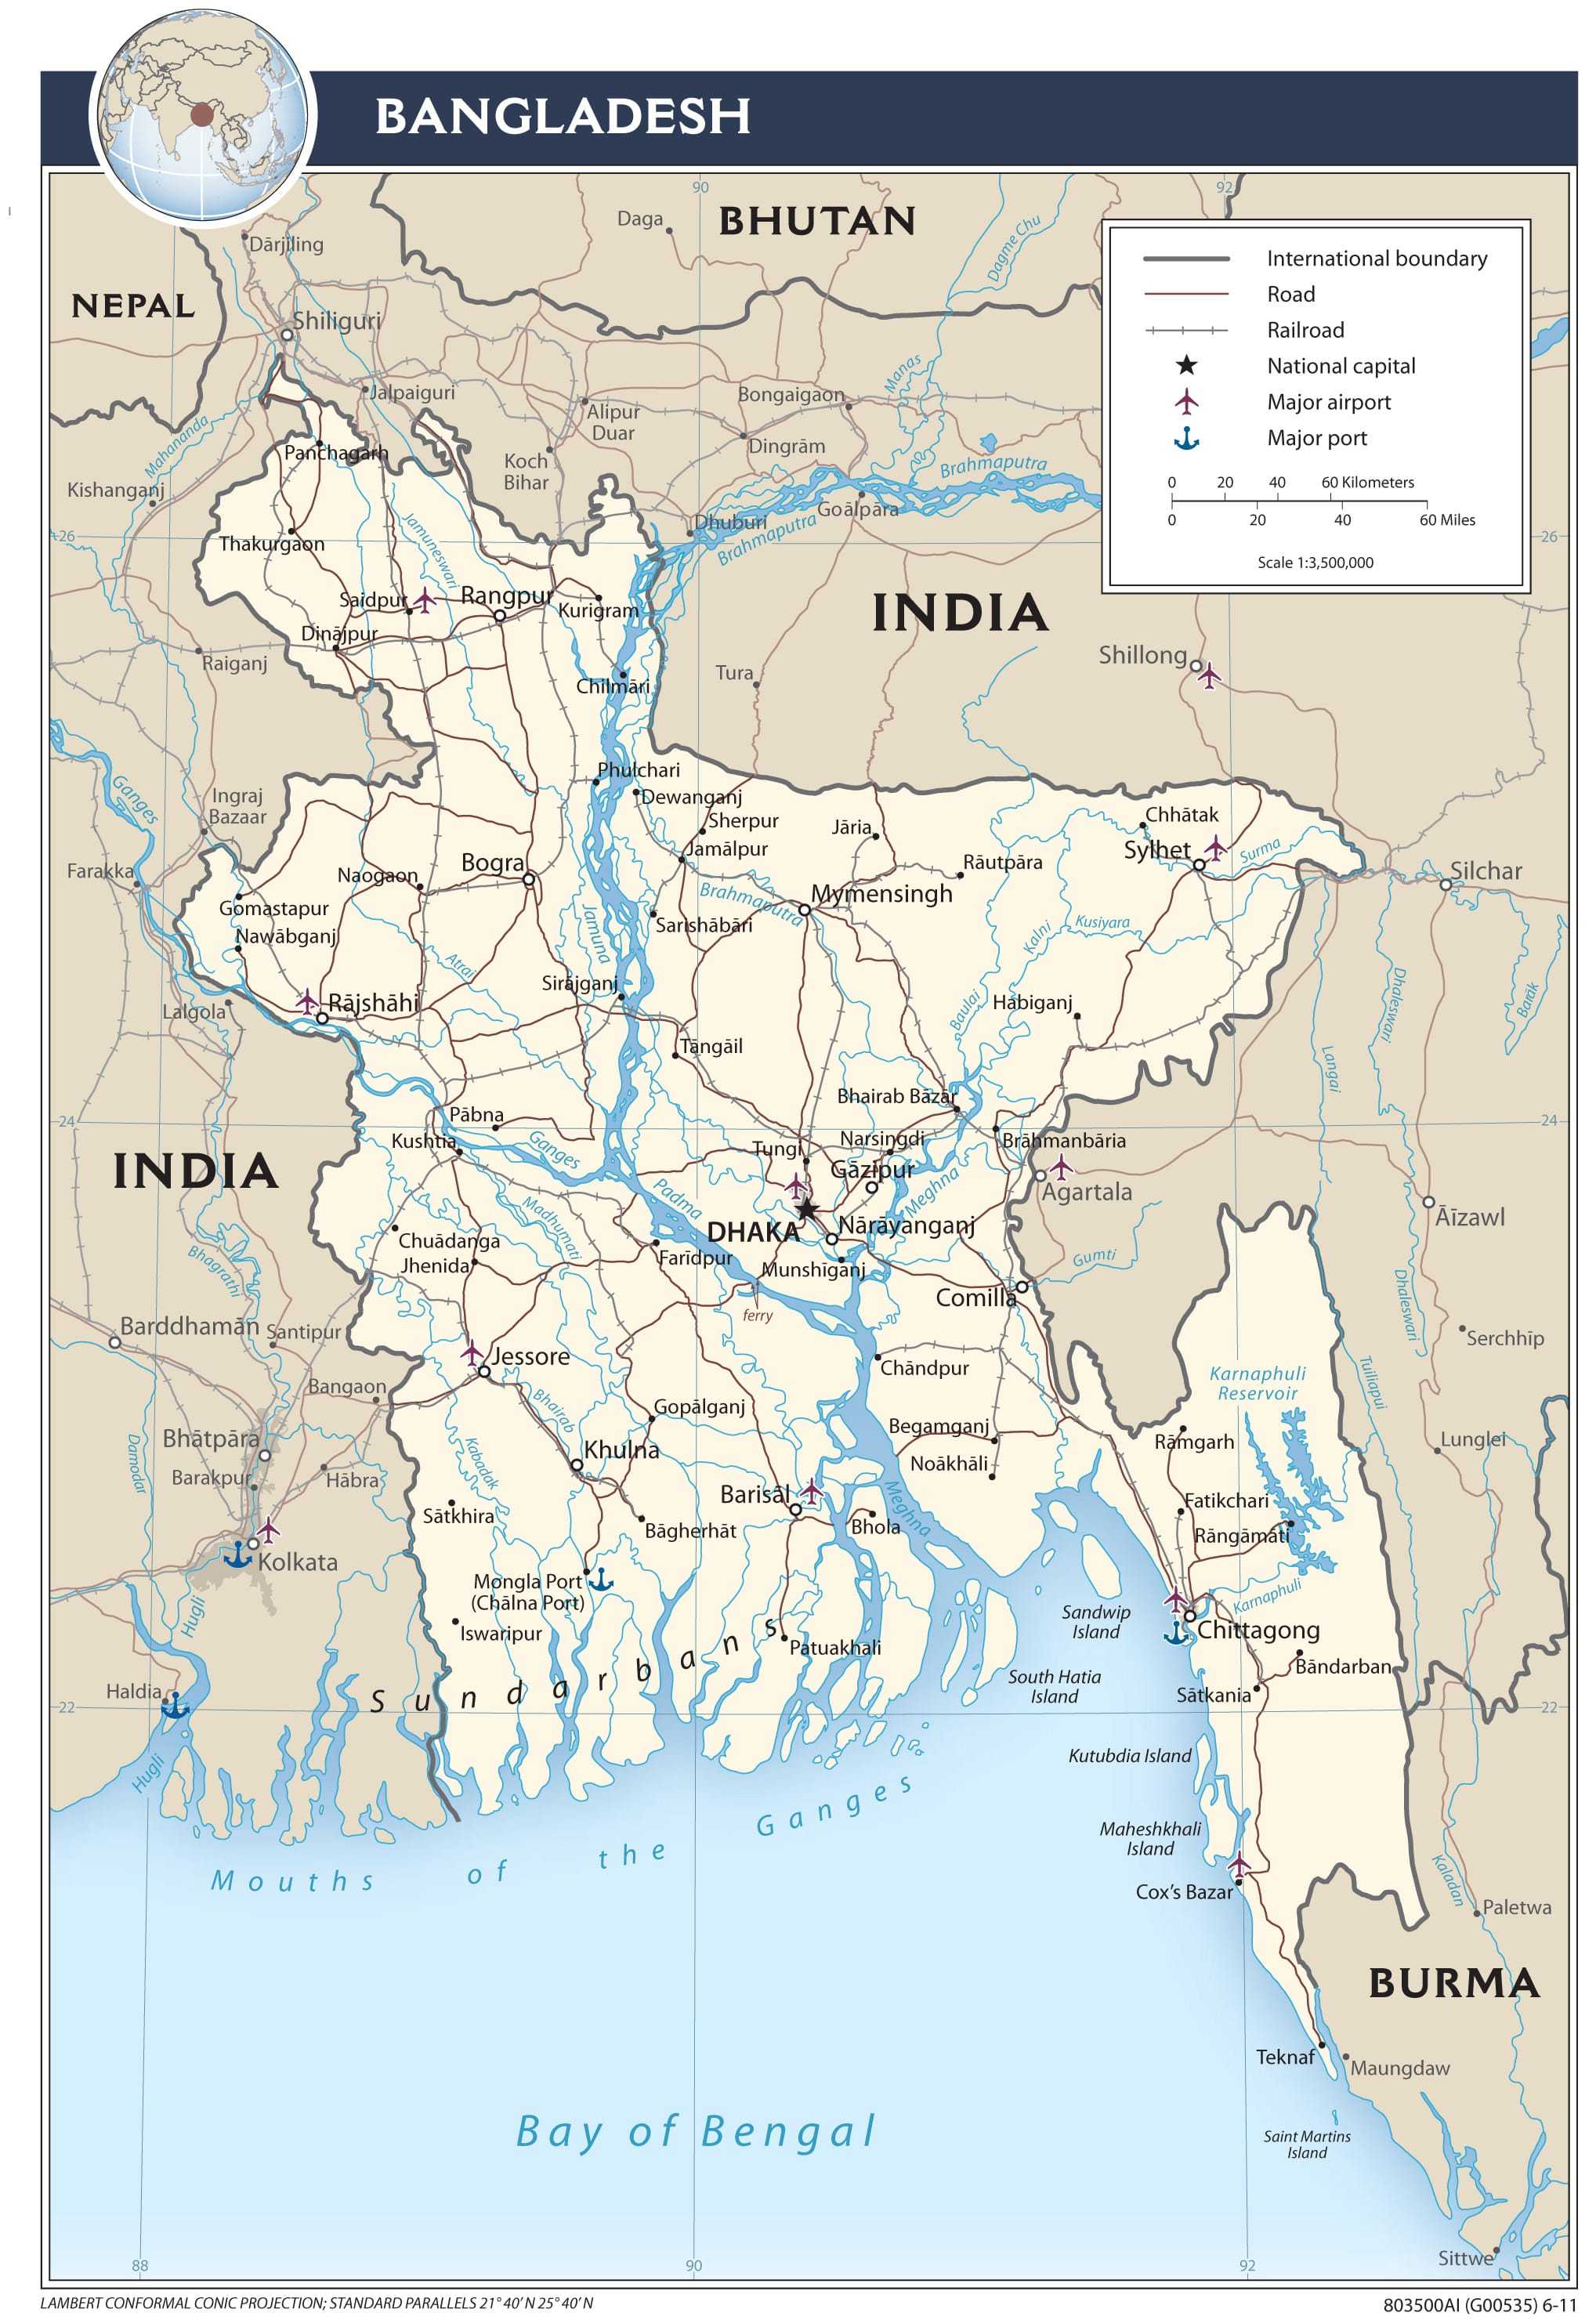 Transportation map of Bangladesh.